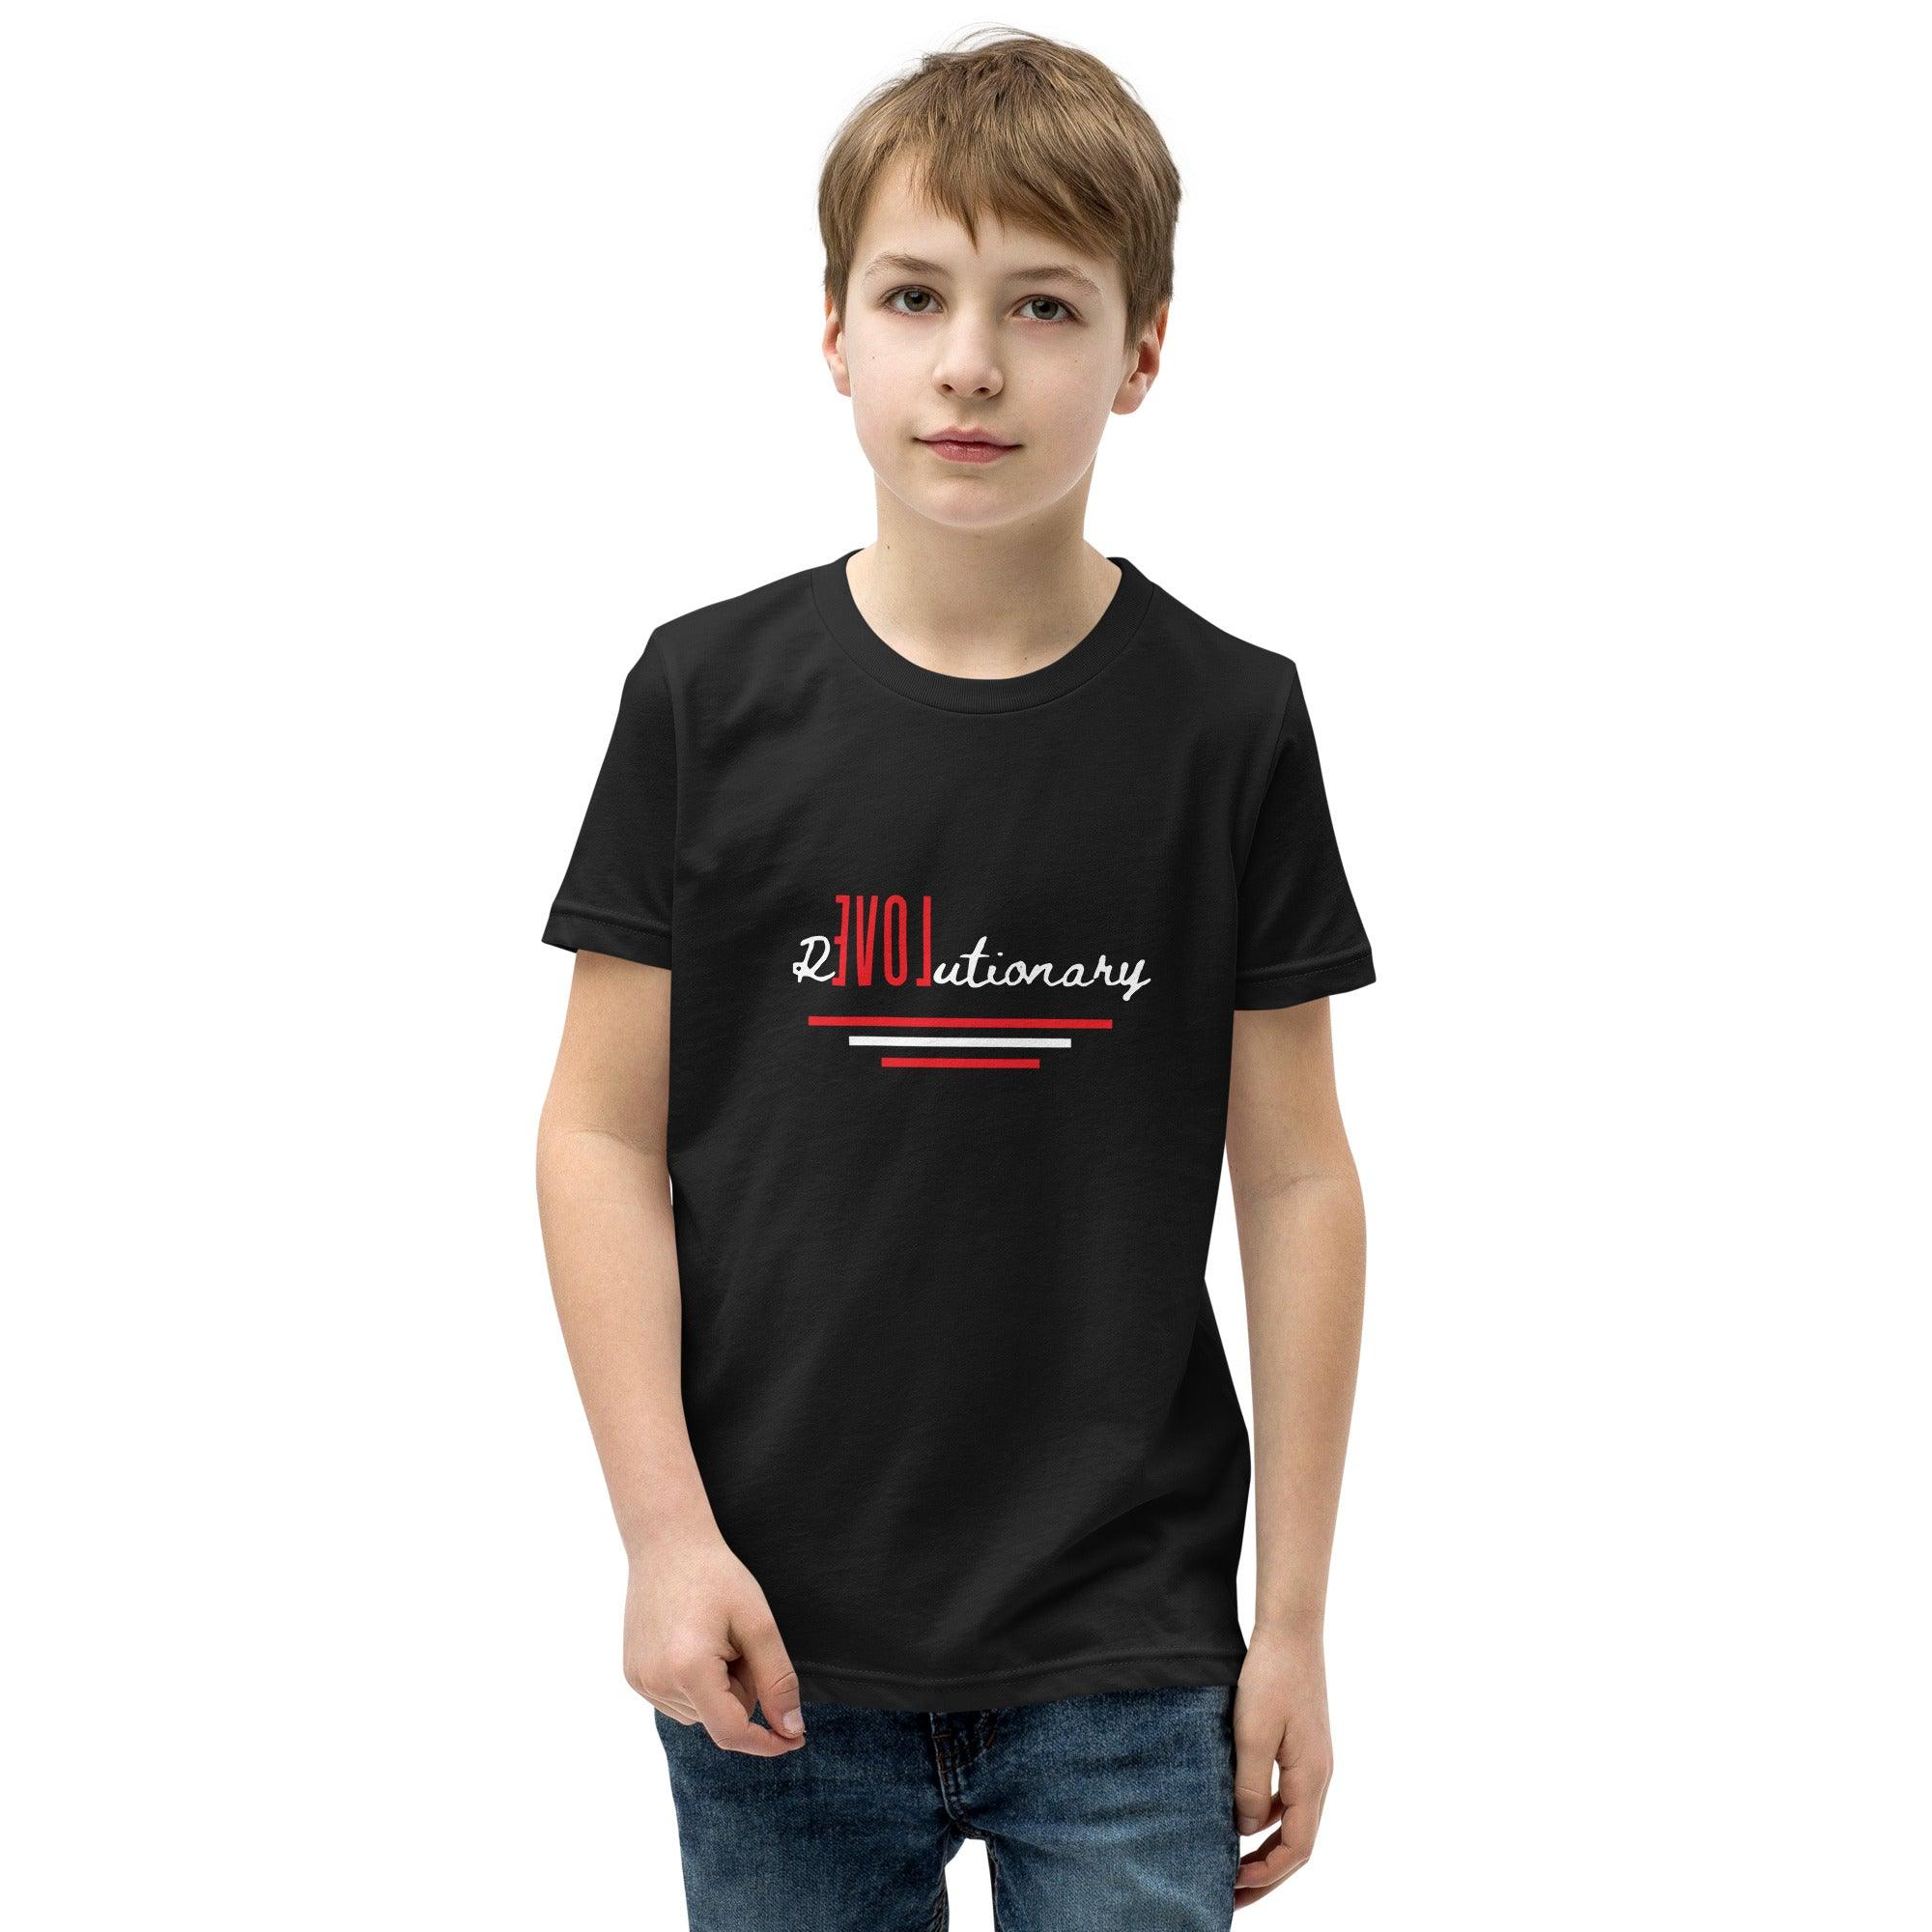 Revolutionary Youth Short Sleeve T-Shirt - Affirm Effect